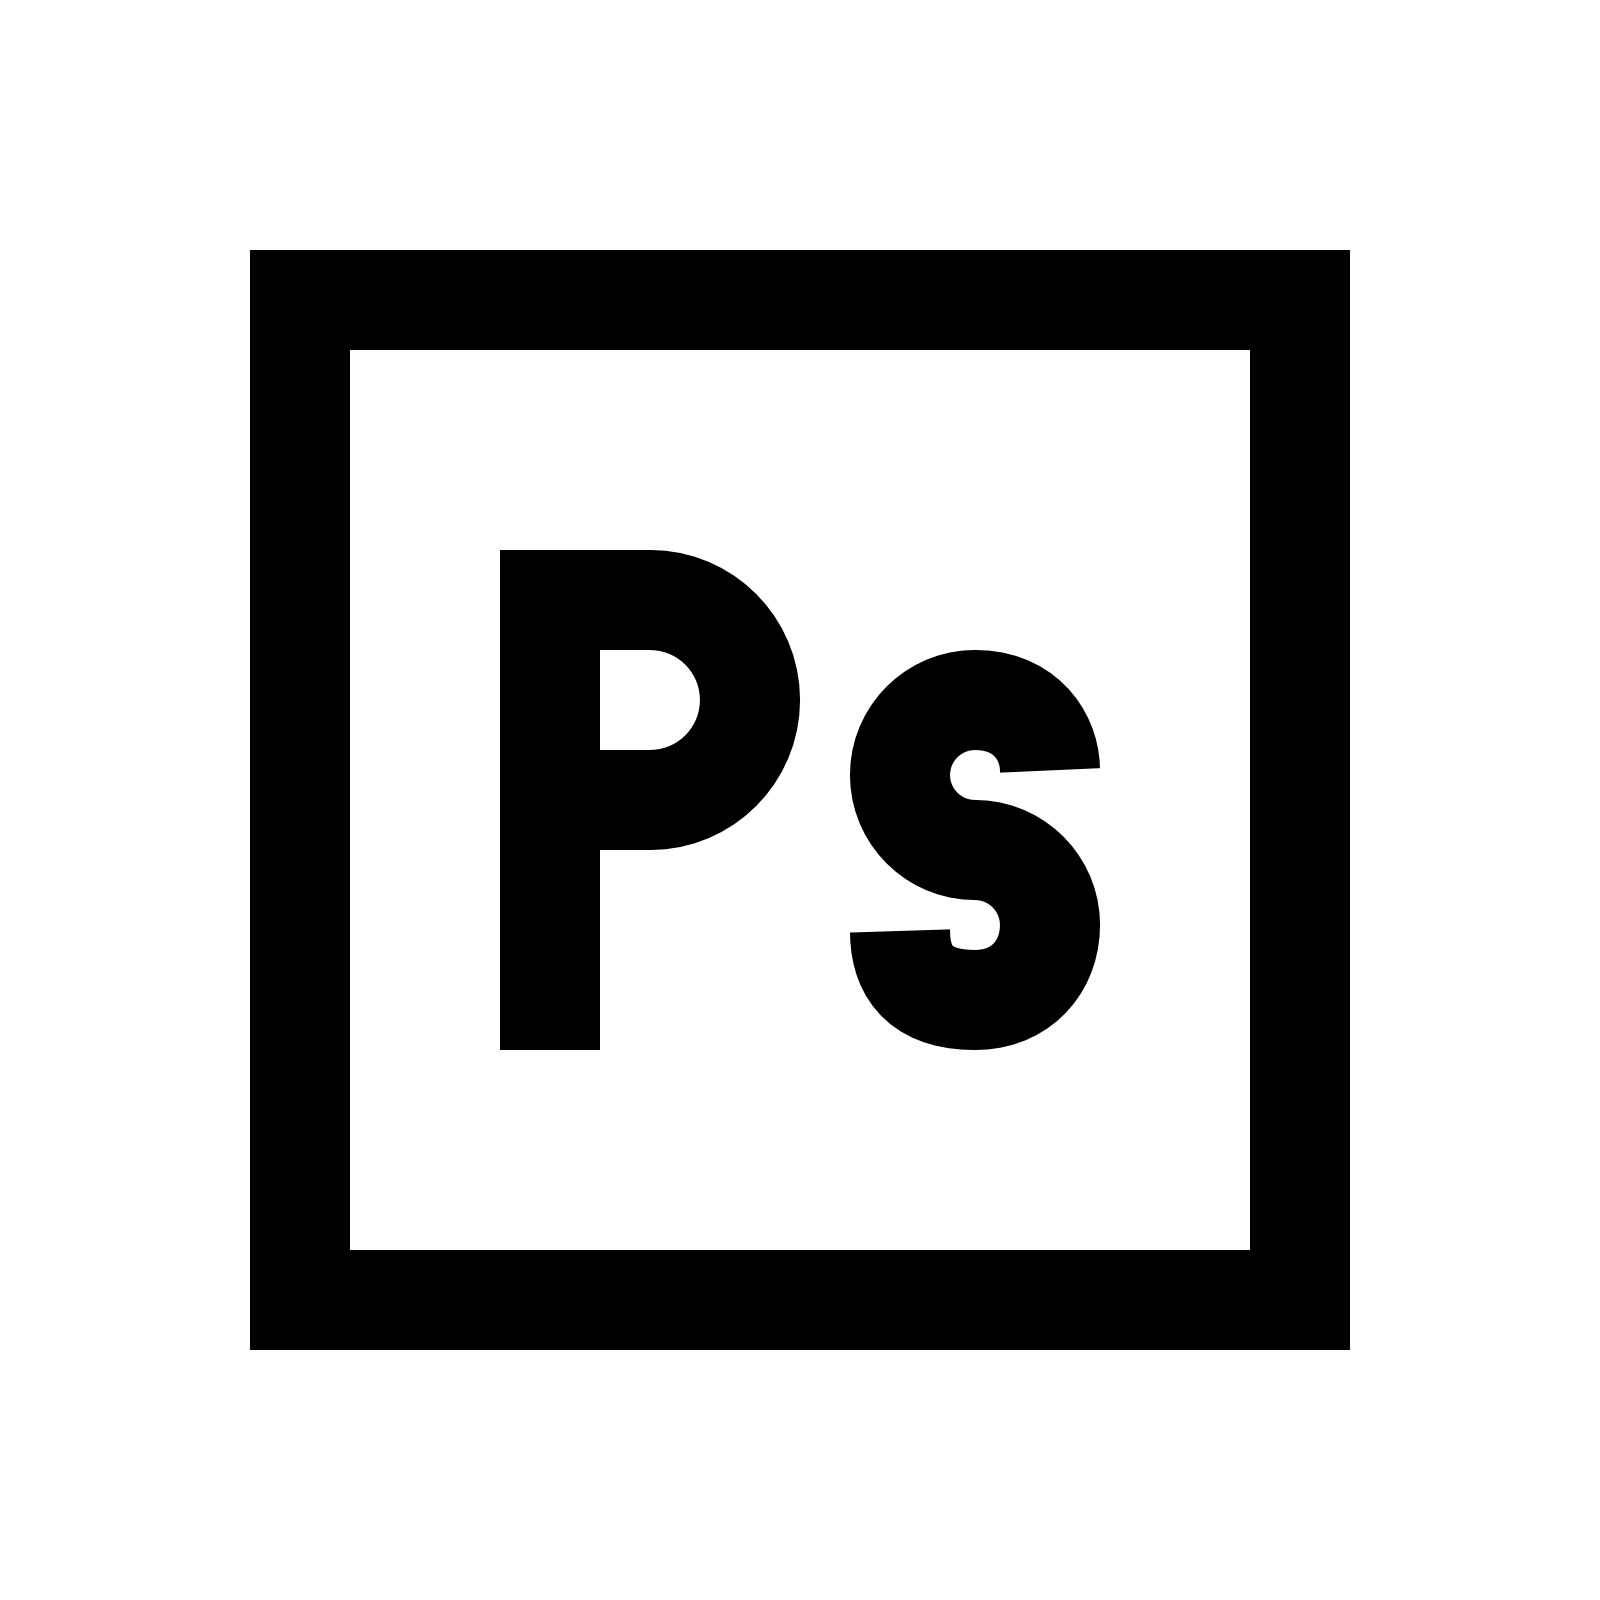 Photoshop Black and White Logo - Adobe Photoshop Icon Free Download At Icons8 Logo Image - Free Logo Png